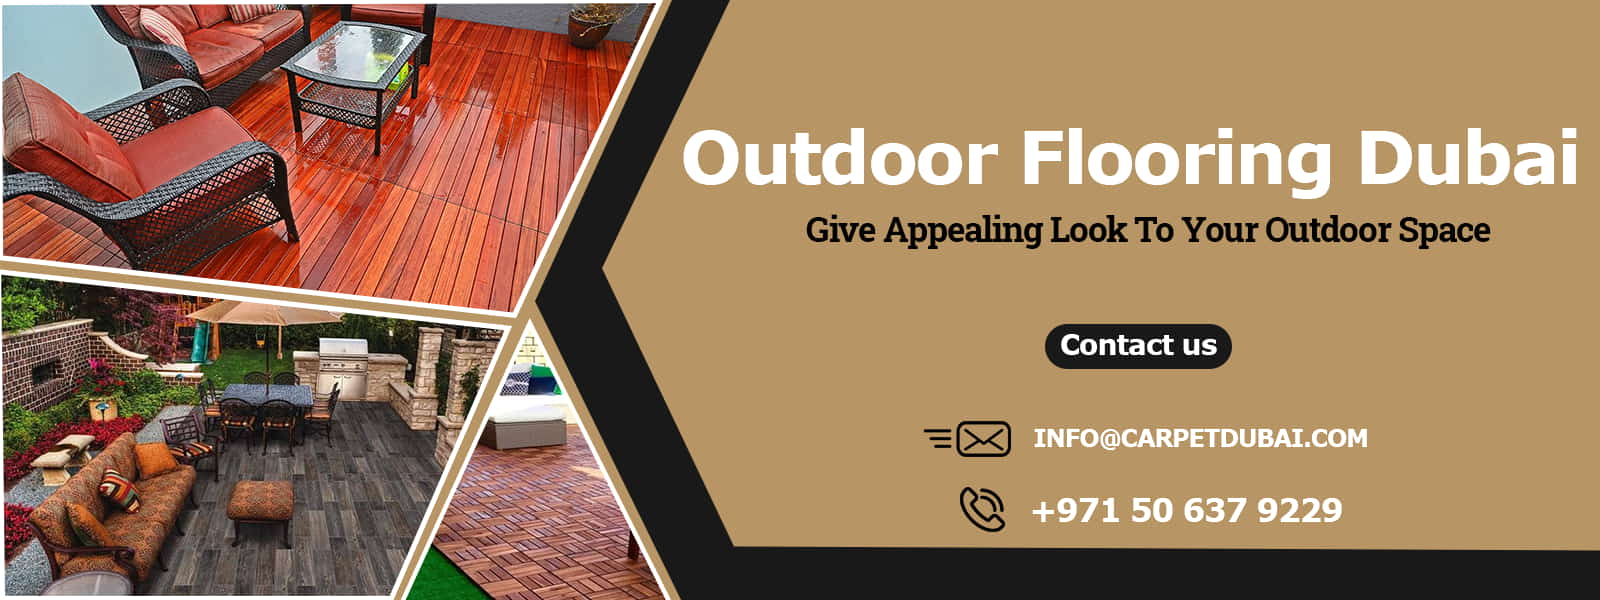 Outdoor-Flooring-Dubai banner